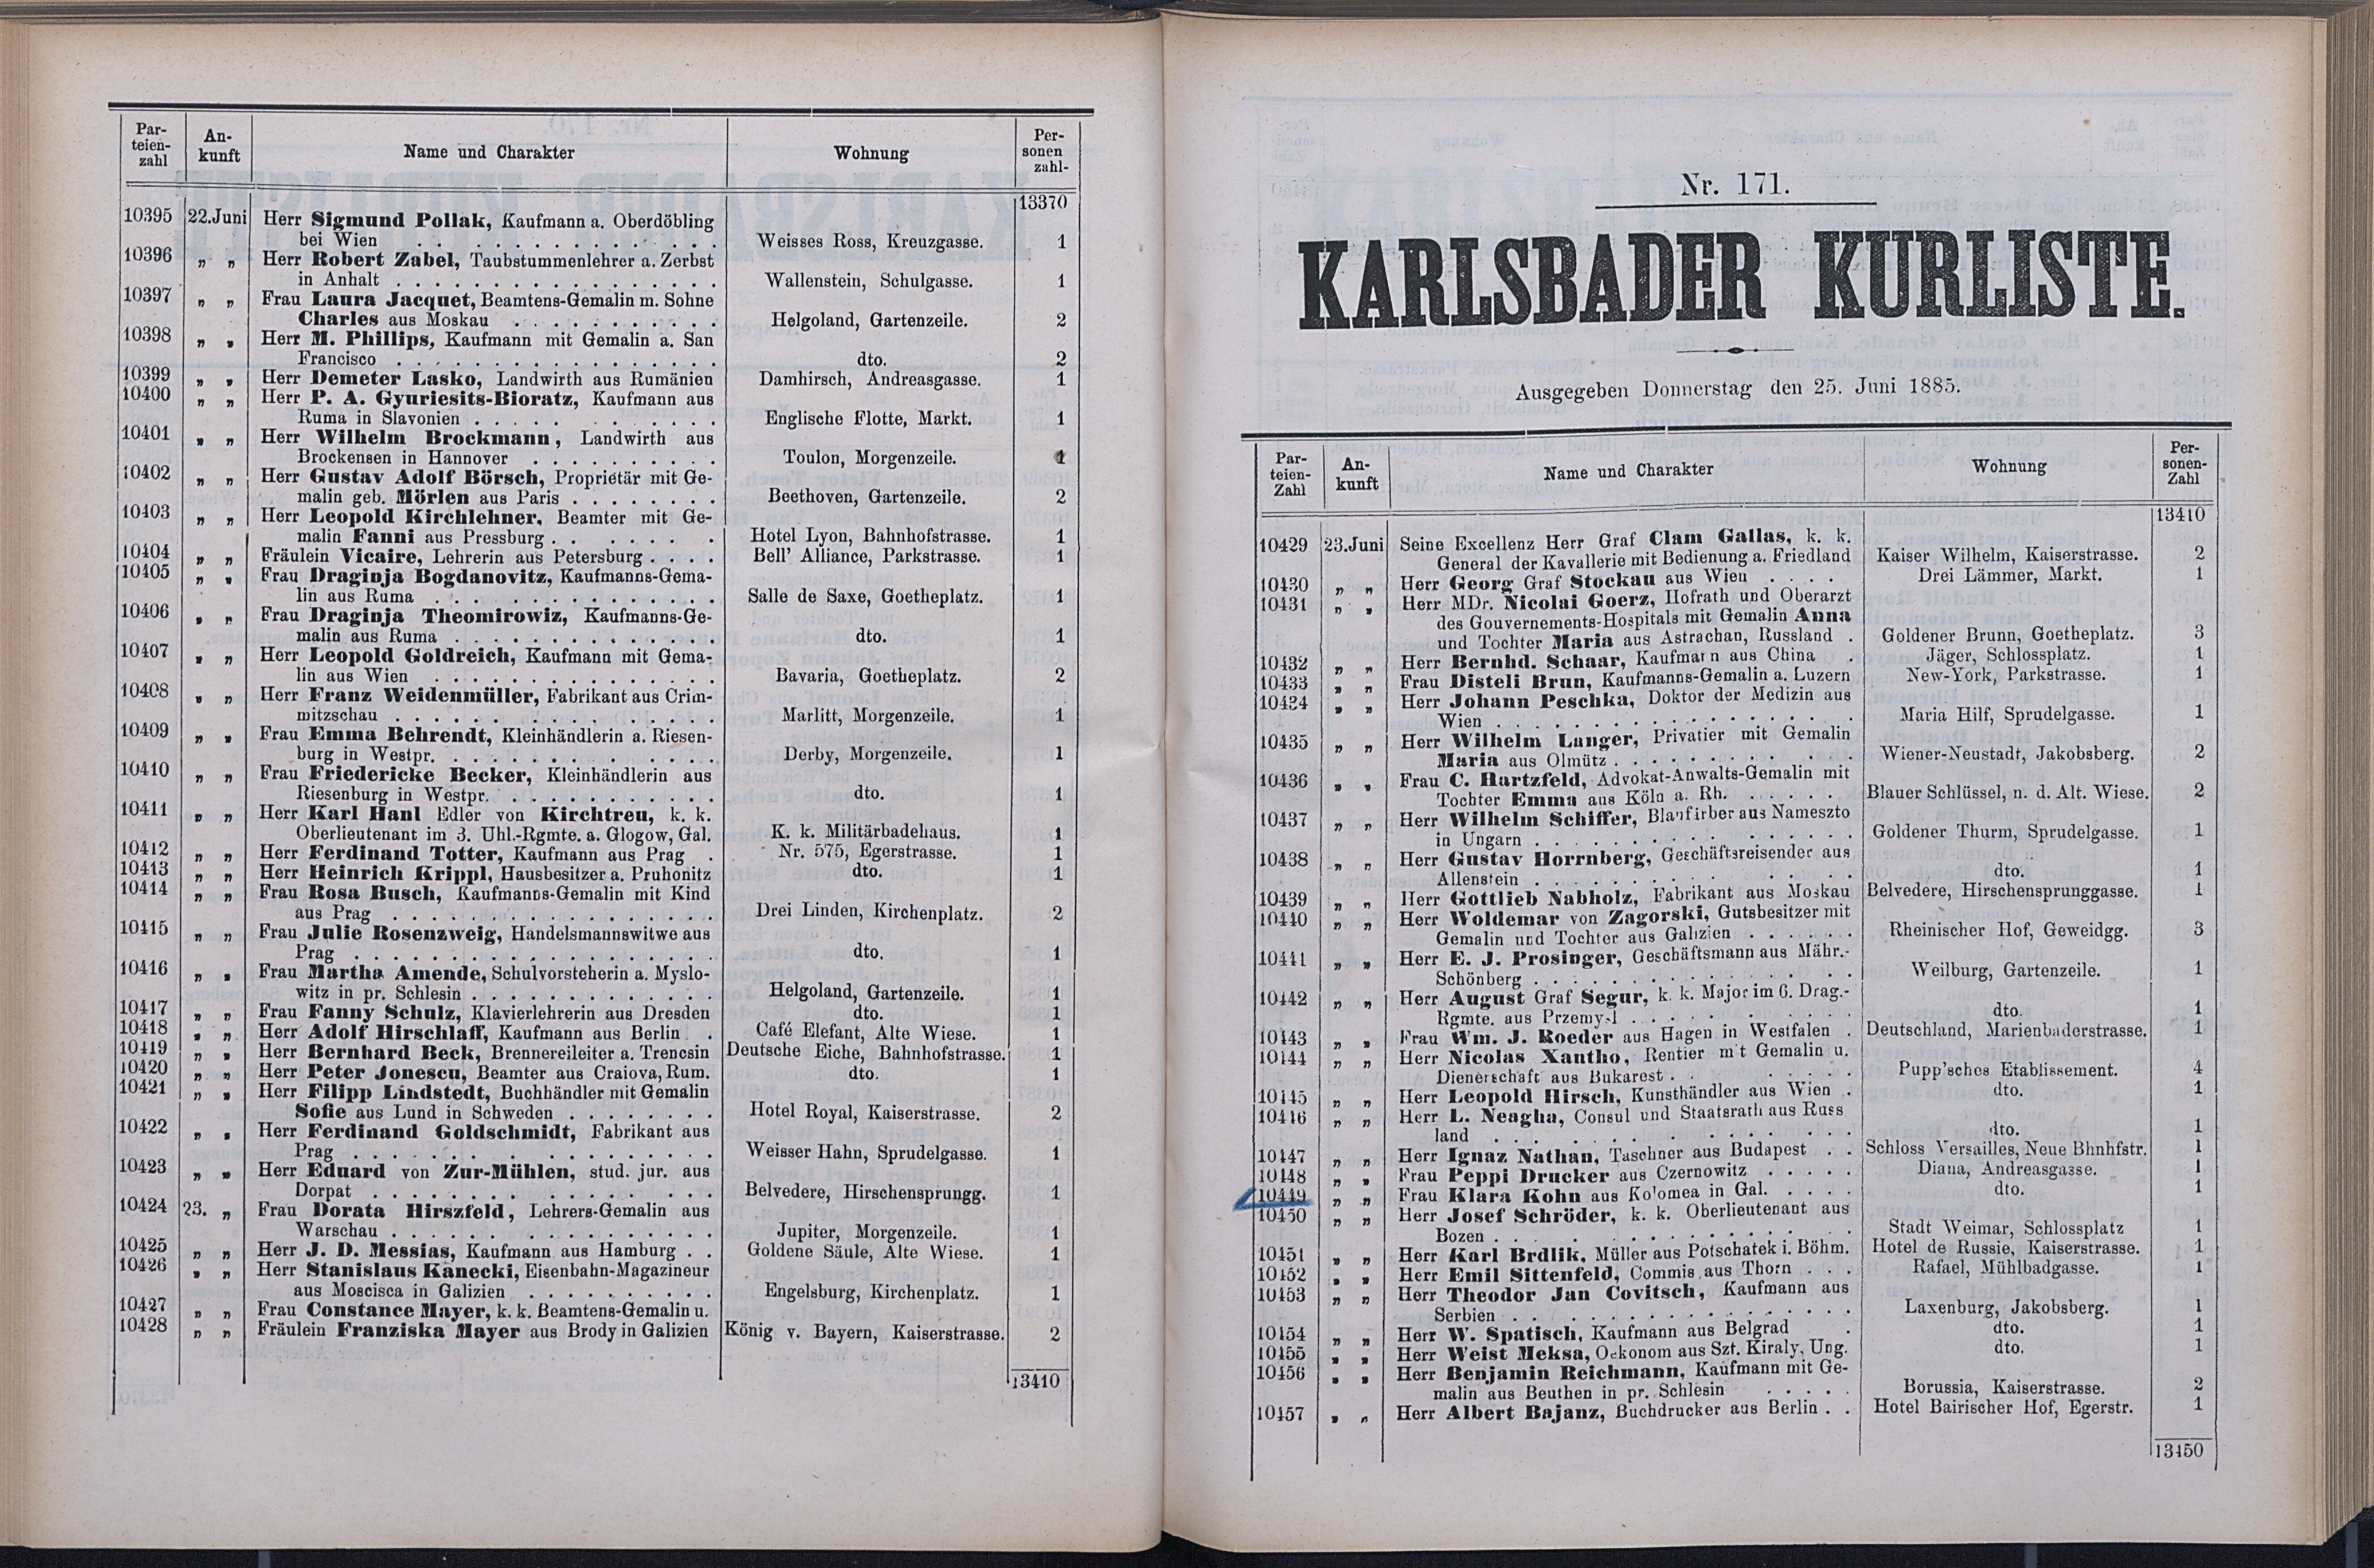 223. soap-kv_knihovna_karlsbader-kurliste-1885_2240